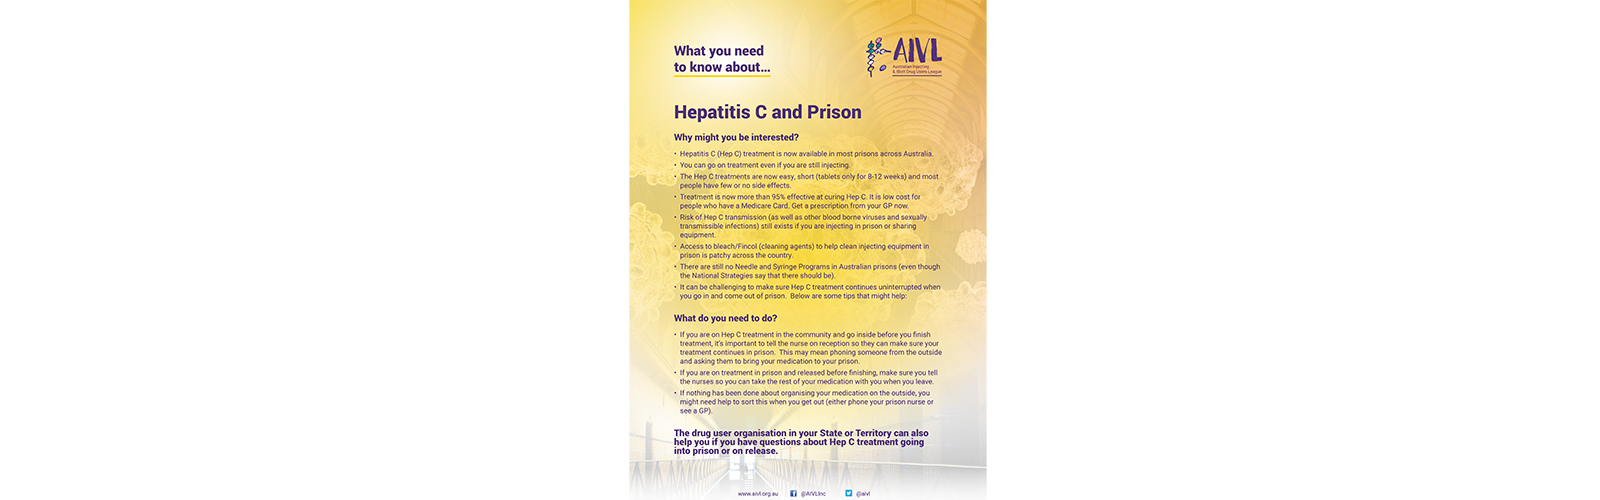 Featured image for “Hepatitis C & Prison”